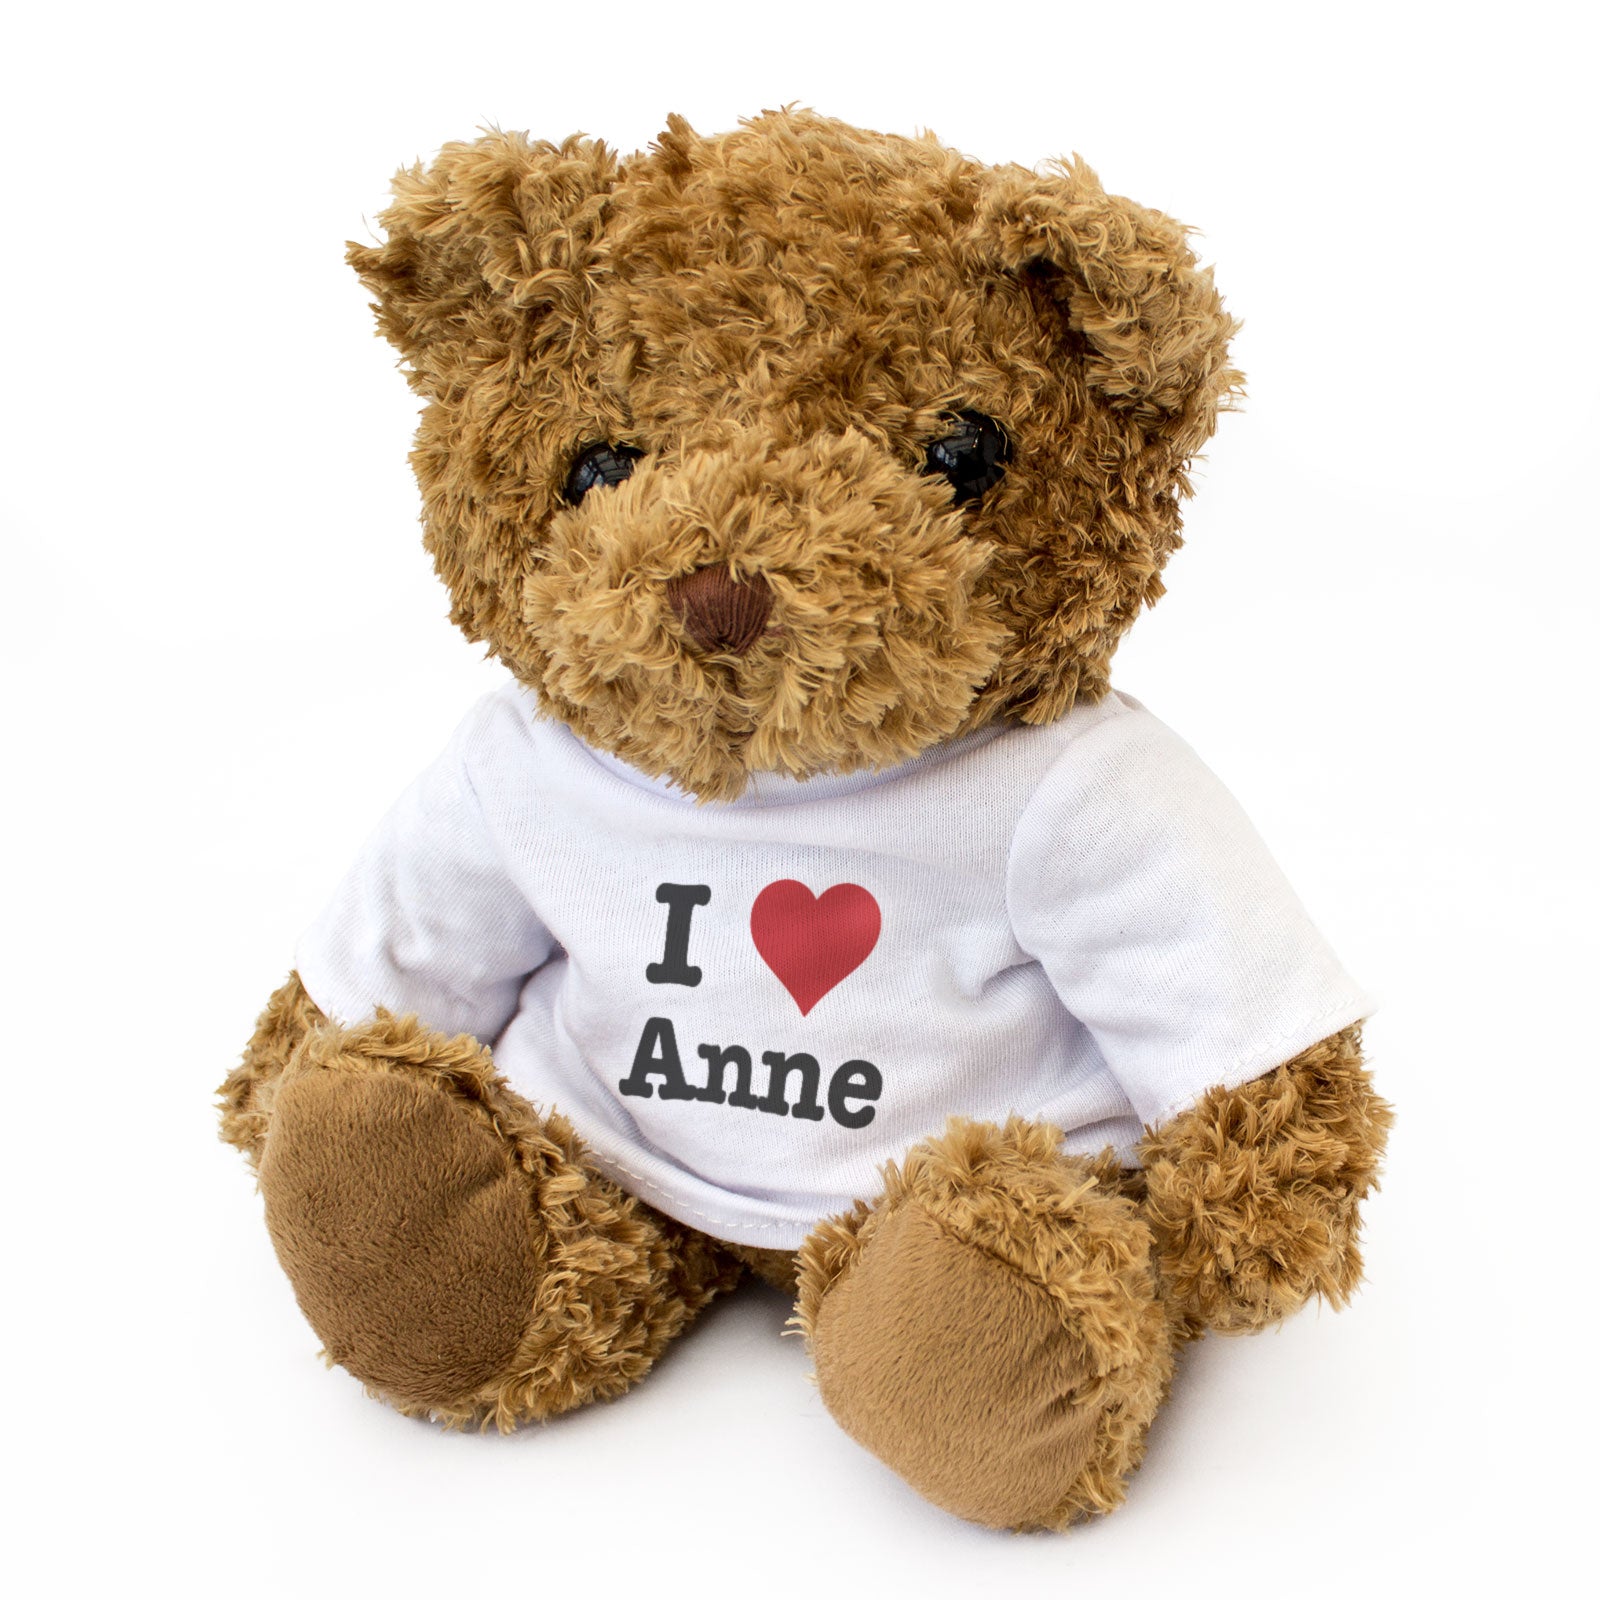 I Love Anne - Teddy Bear